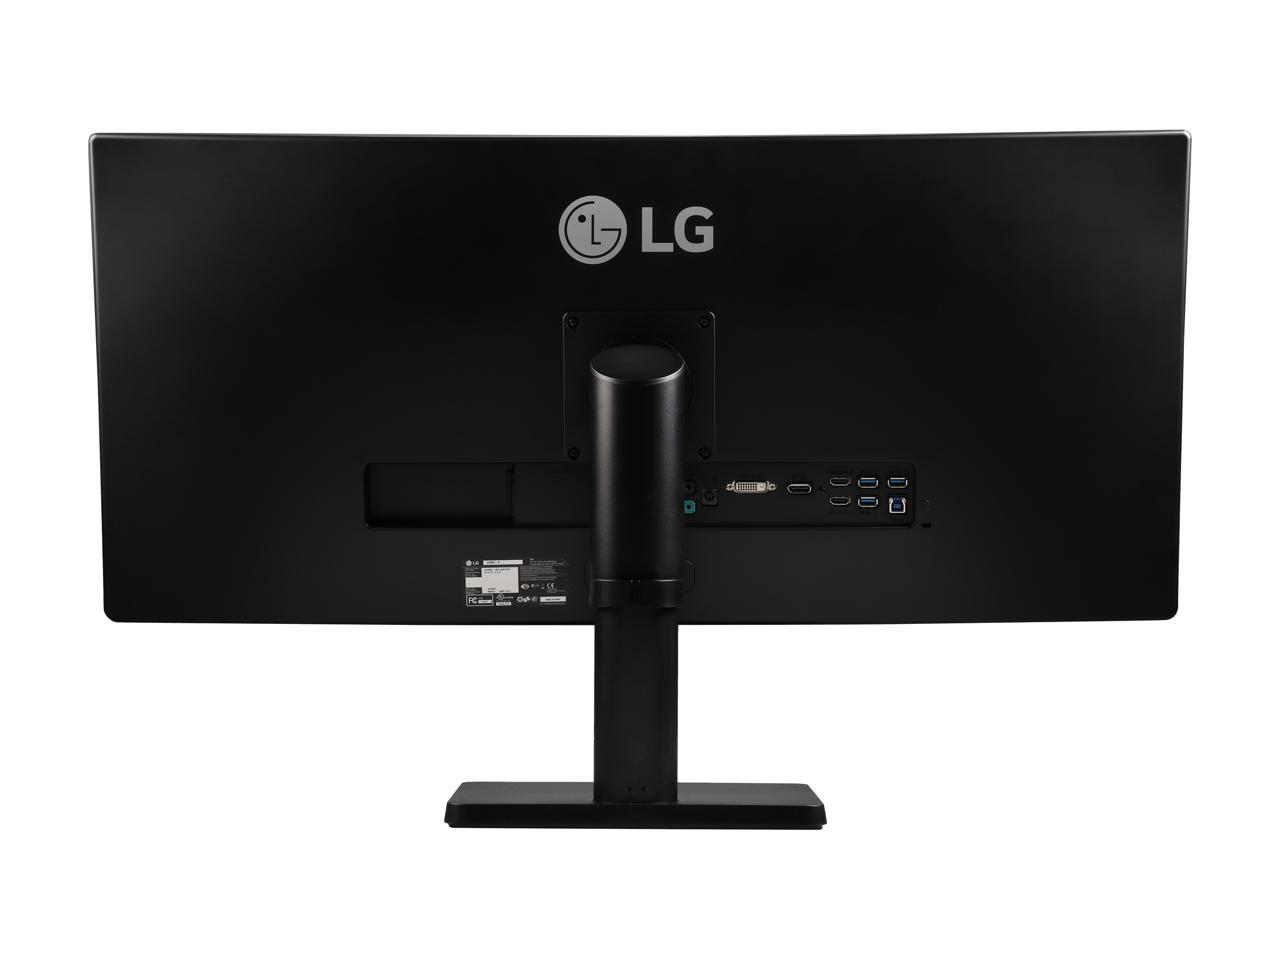 LG 34UB67-B Black 34" 21:9 UltraWide IPS LED Backlight LCD Monitor, DVI, HDMI, DisplayPort, USB, Built-in Speakers 300 cd/m2, Tilt Swivel Height Adjustable